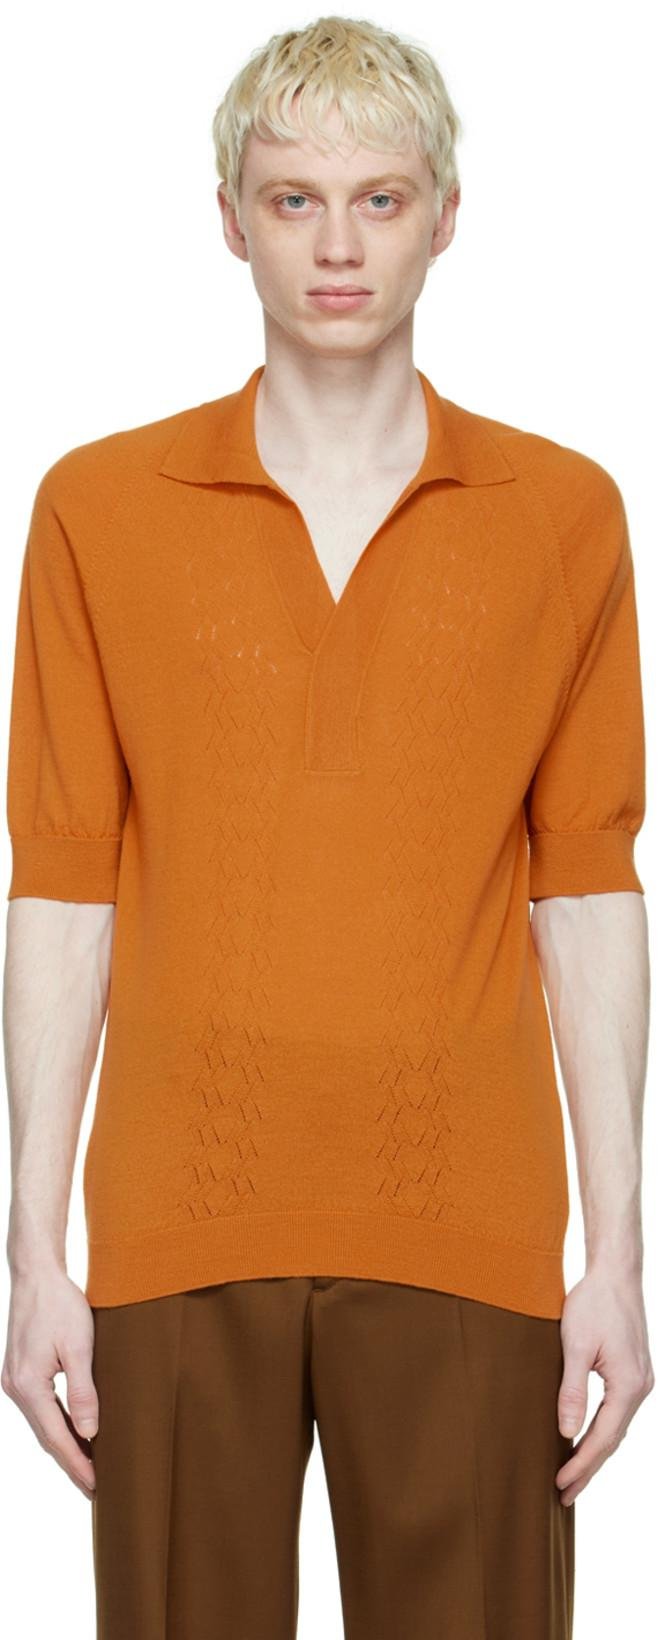 Orange Remi Polo Shirt by CMMN SWDN